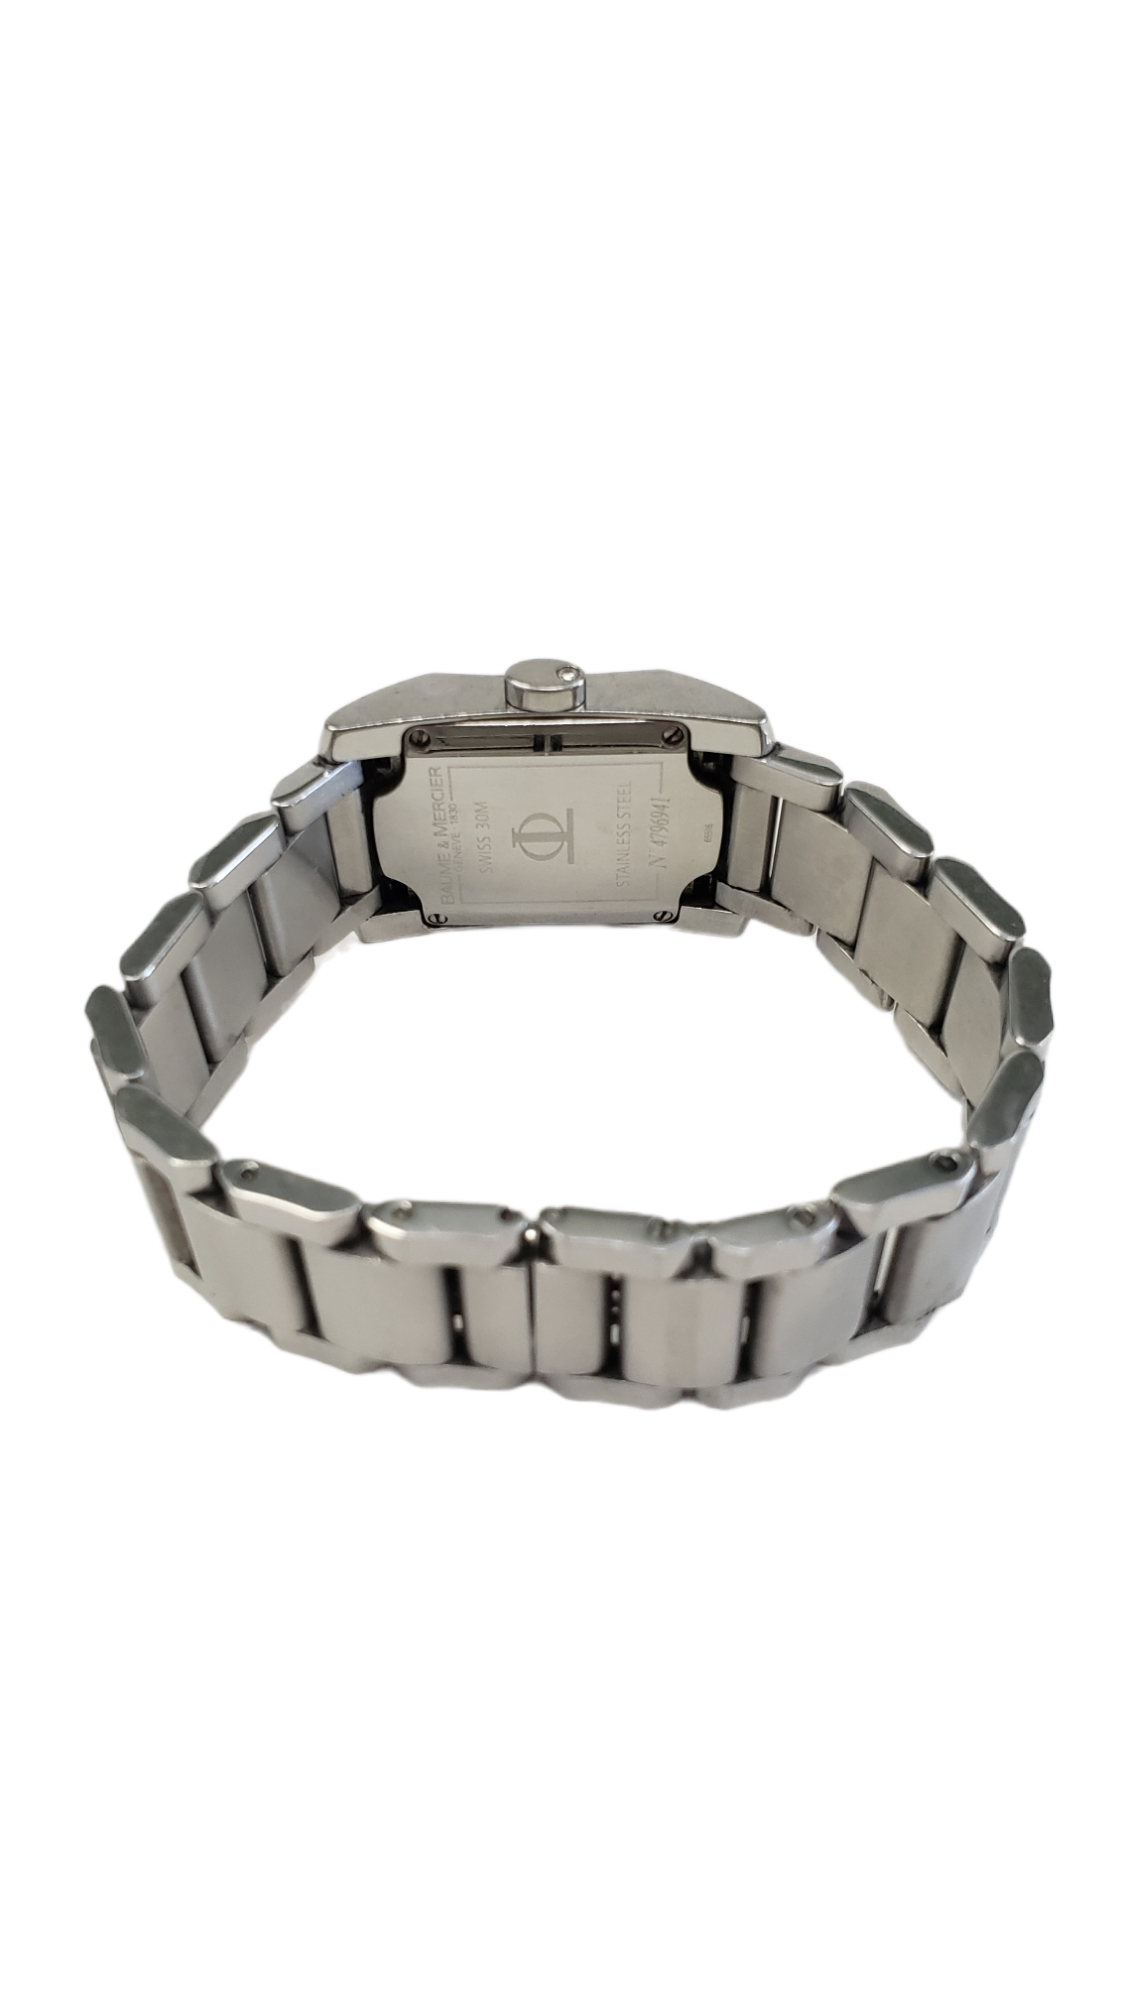 Baume And Mercier Ladies Hampton Diamond Accented Wrist Watch 22mm MOP 65516